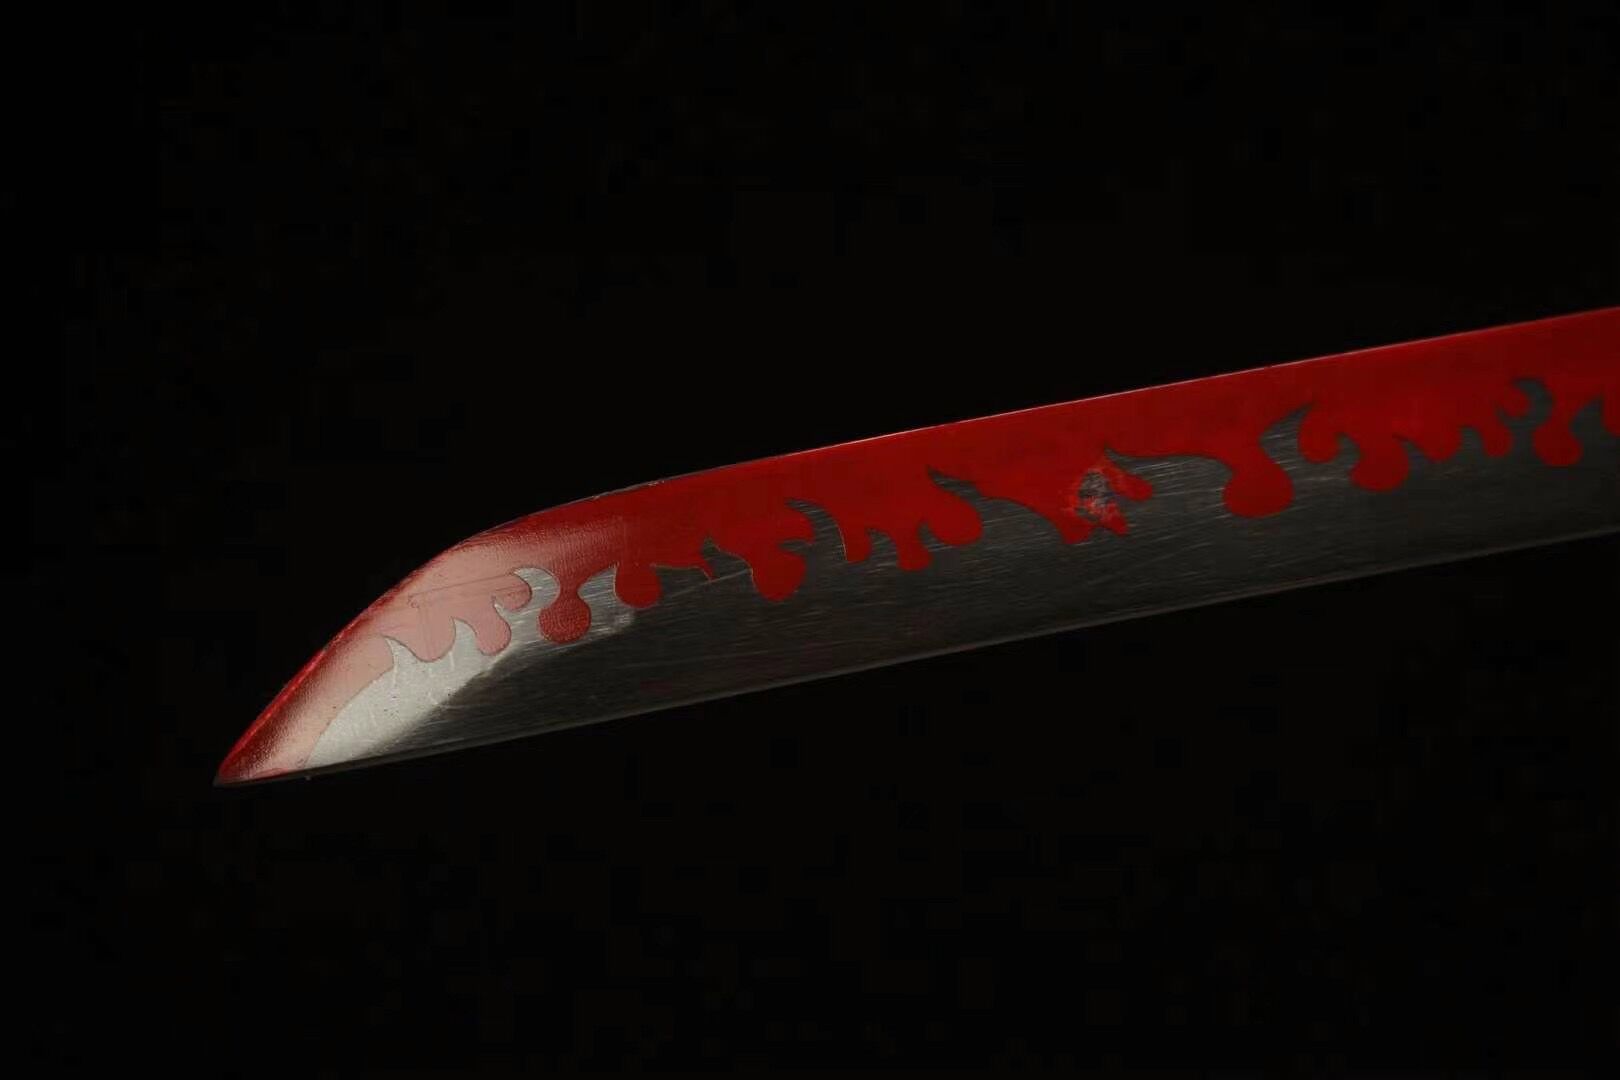 Yamato,One piece,Anime Version Katana,Janpanese Samurai sword,1060 High-carbon steel